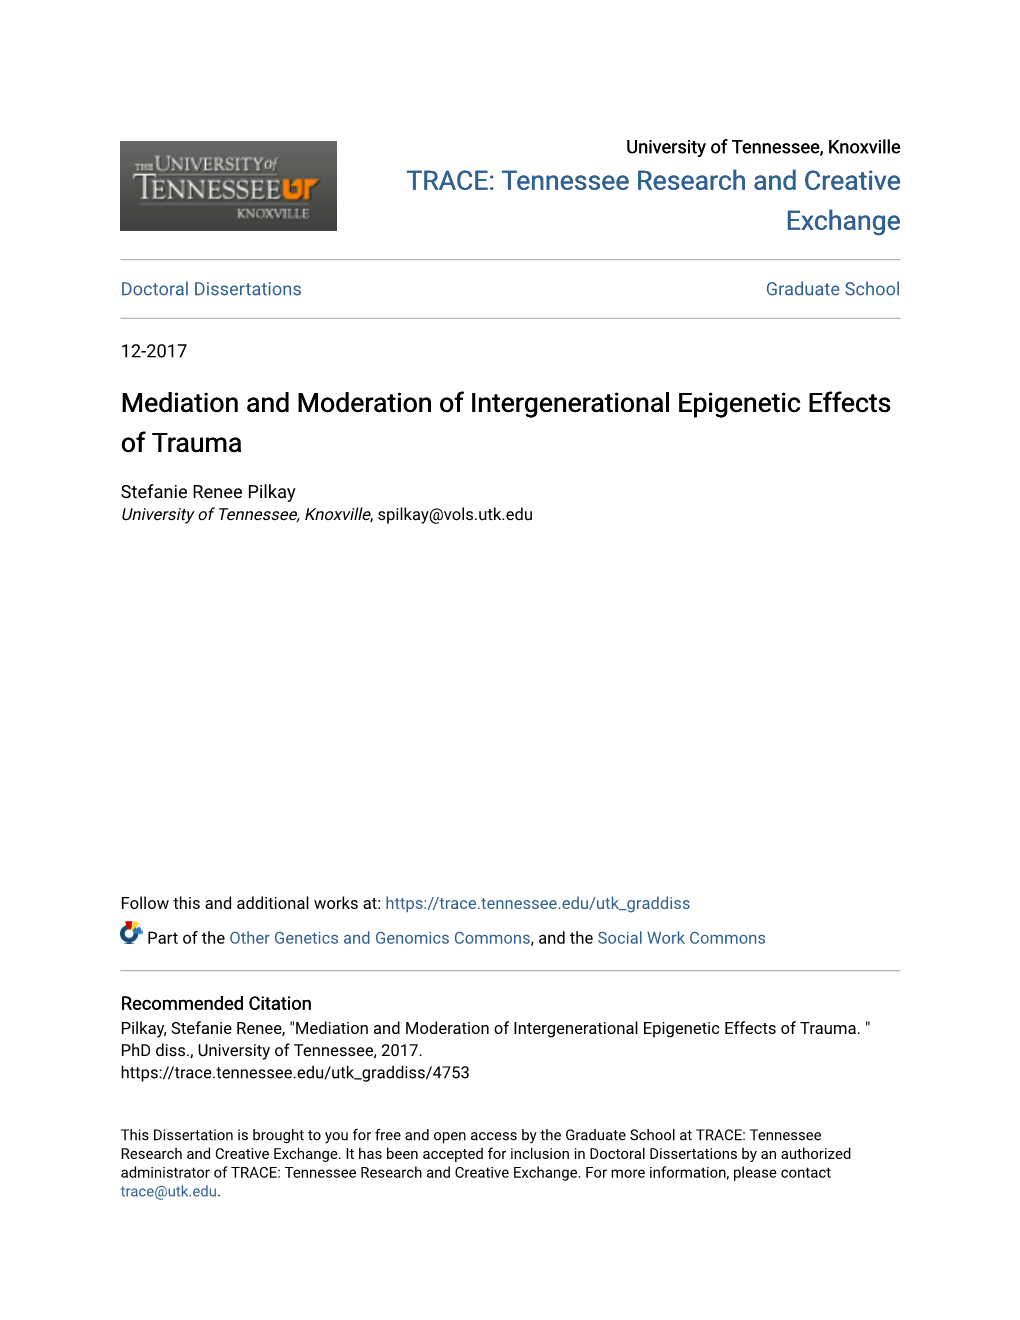 Mediation and Moderation of Intergenerational Epigenetic Effects of Trauma